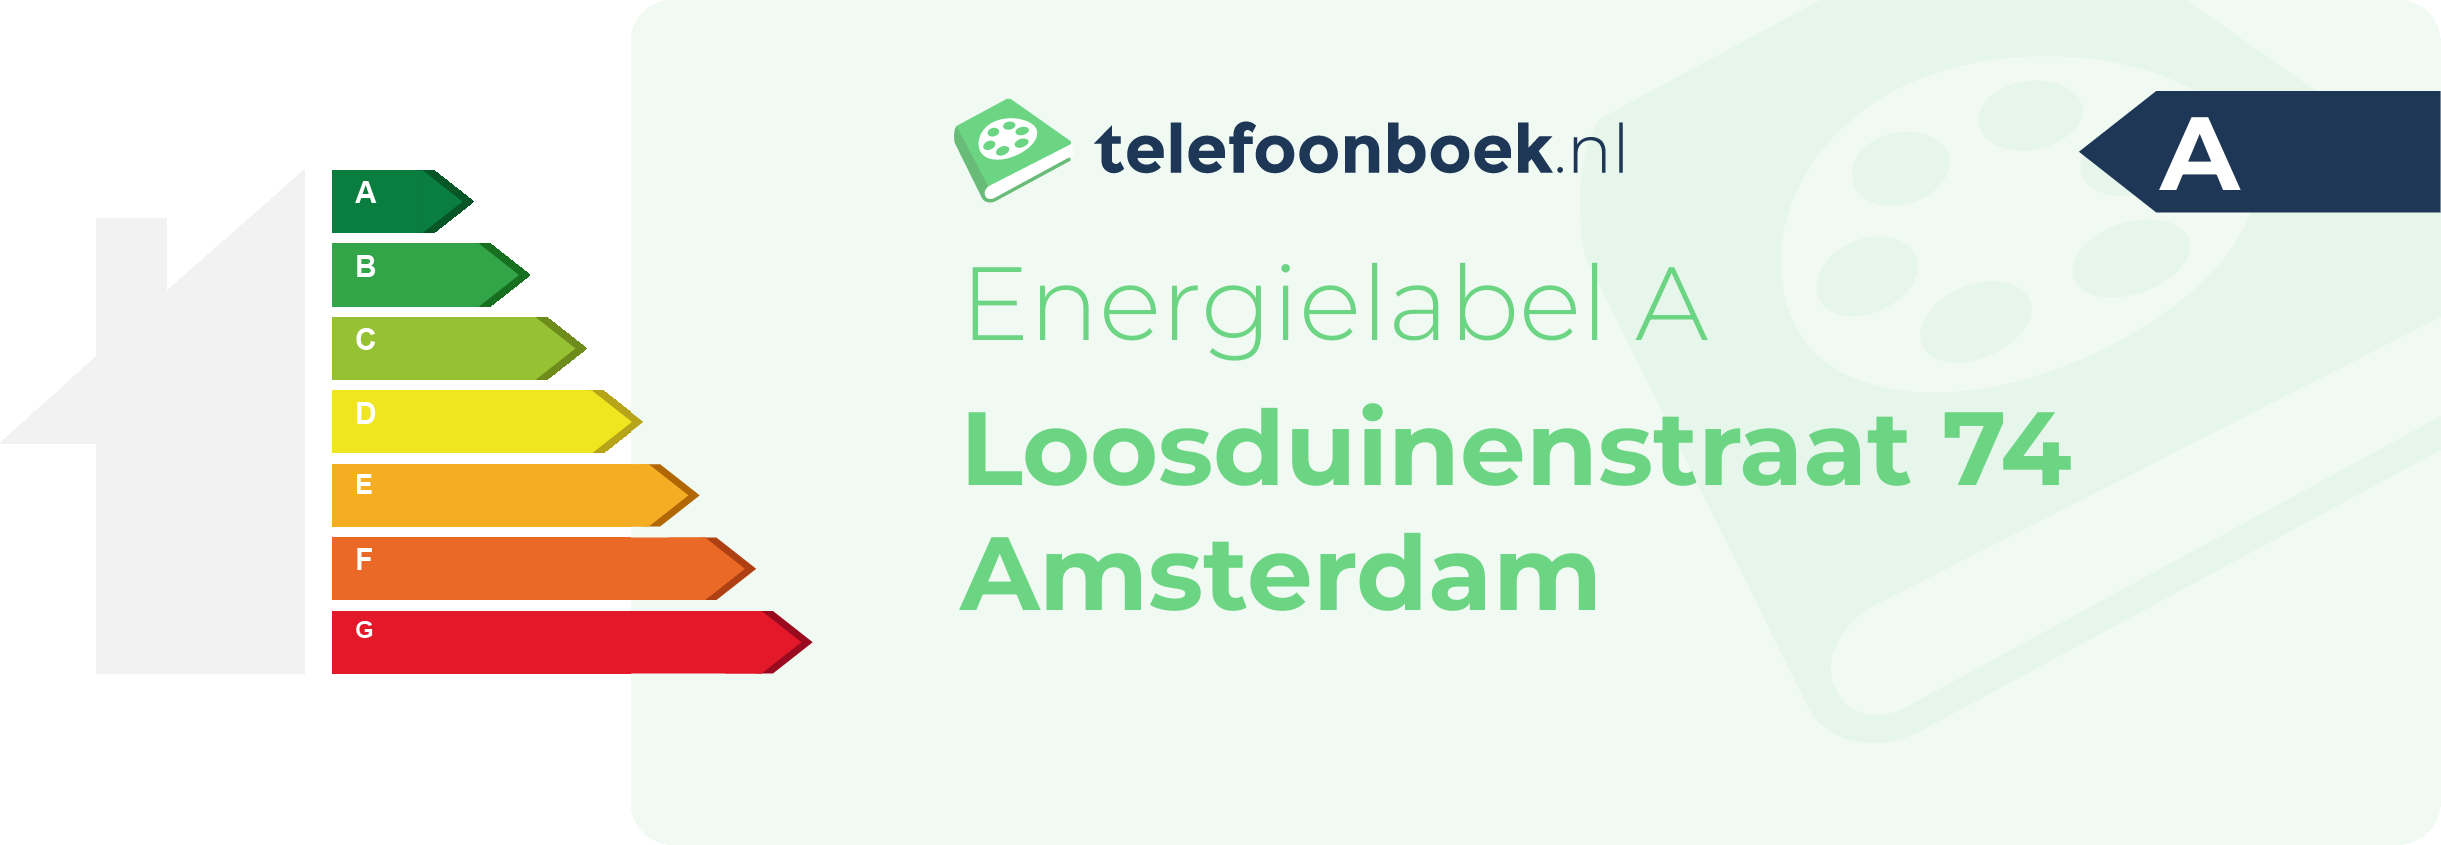 Energielabel Loosduinenstraat 74 Amsterdam